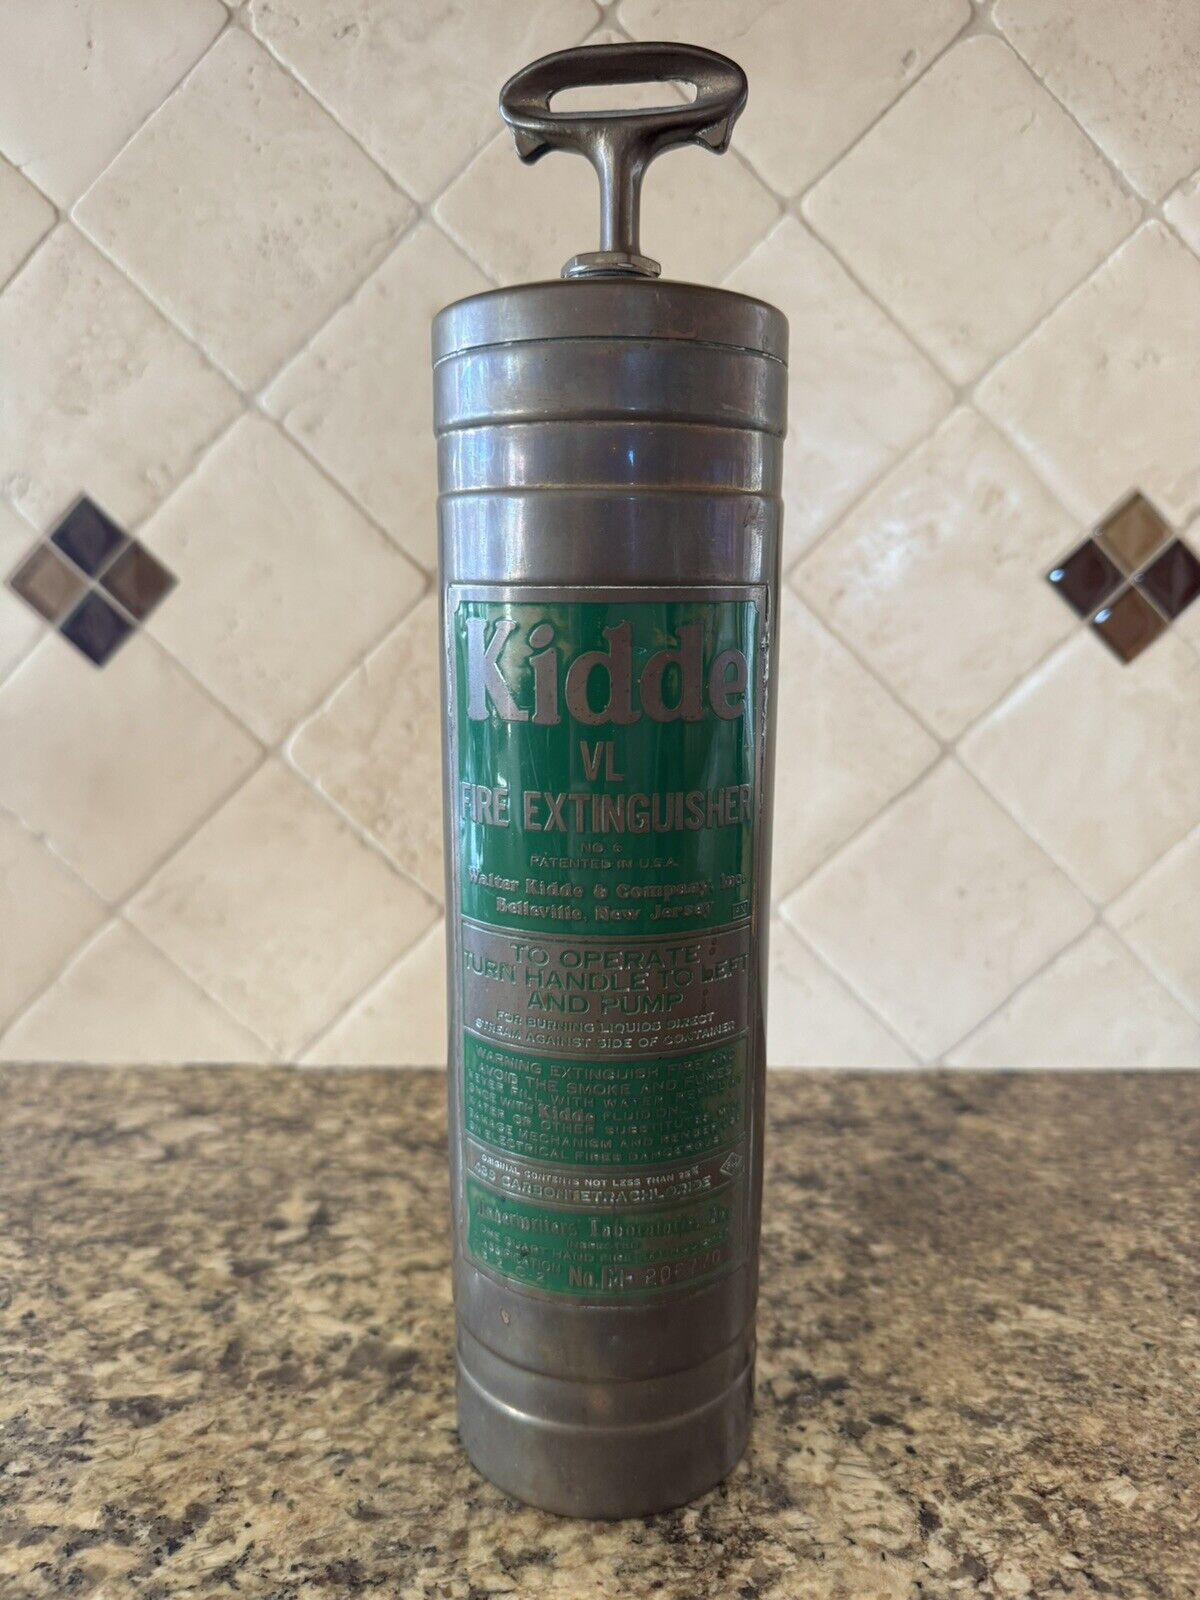 Kidde Vintage Brass Fire Extinguisher. Empty. 206770. Hand Pump.